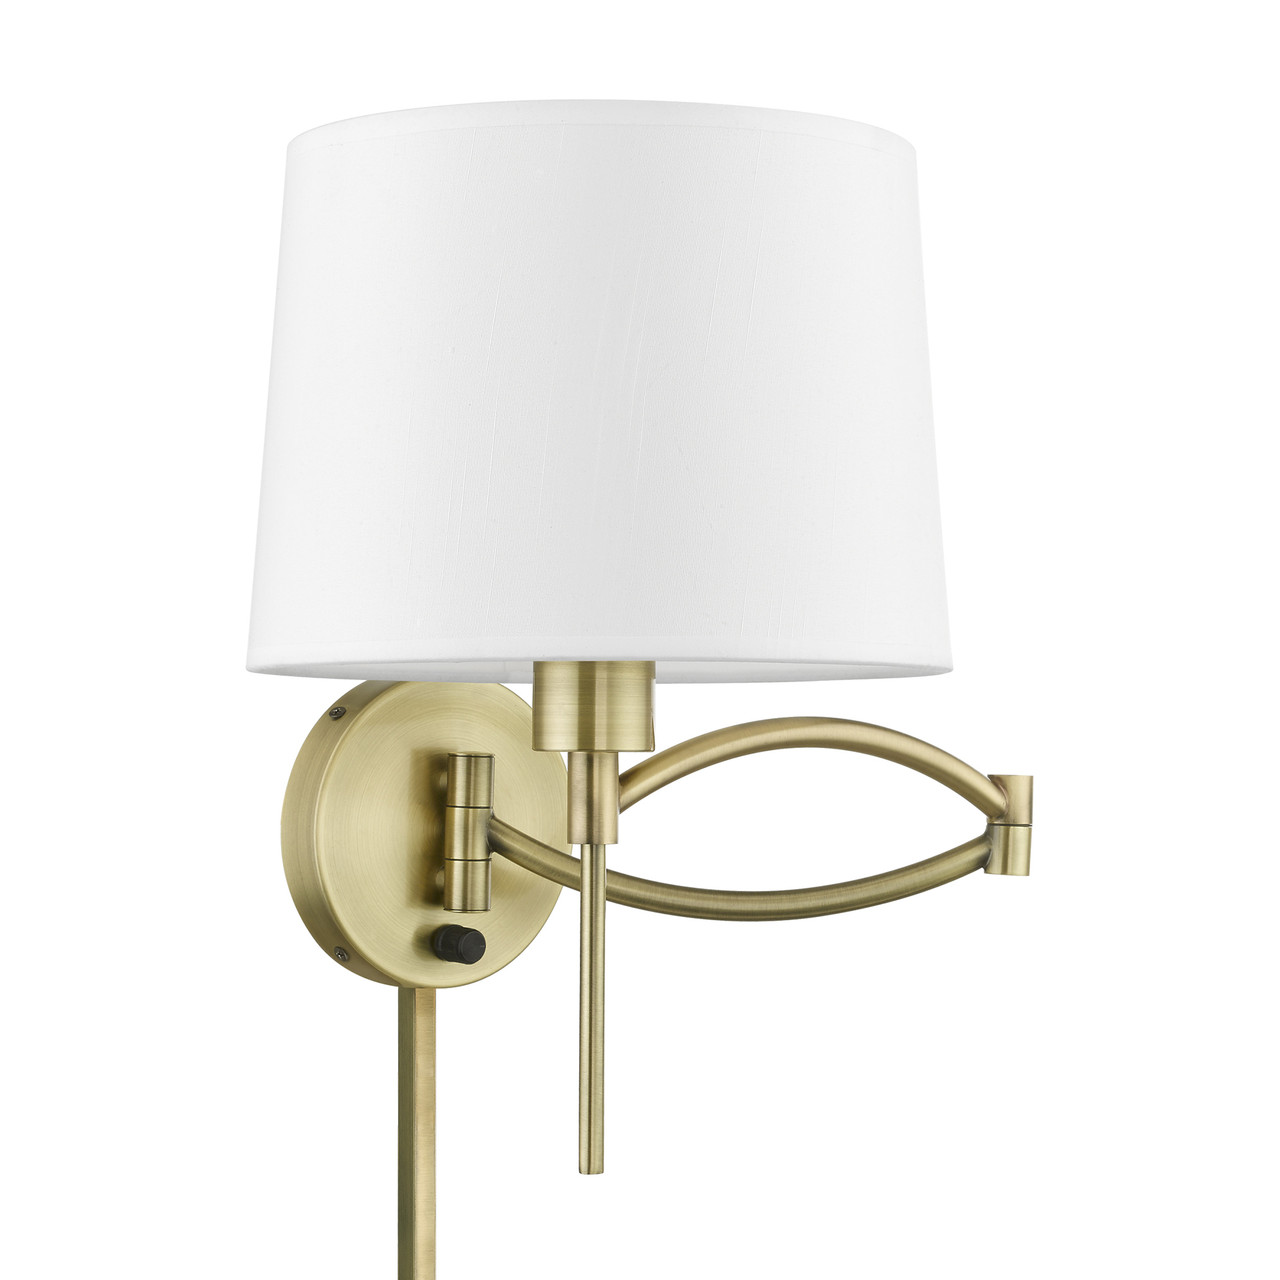 LIVEX LIGHTING 40044-01 1 Light Antique Brass Swing Arm Wall Lamp